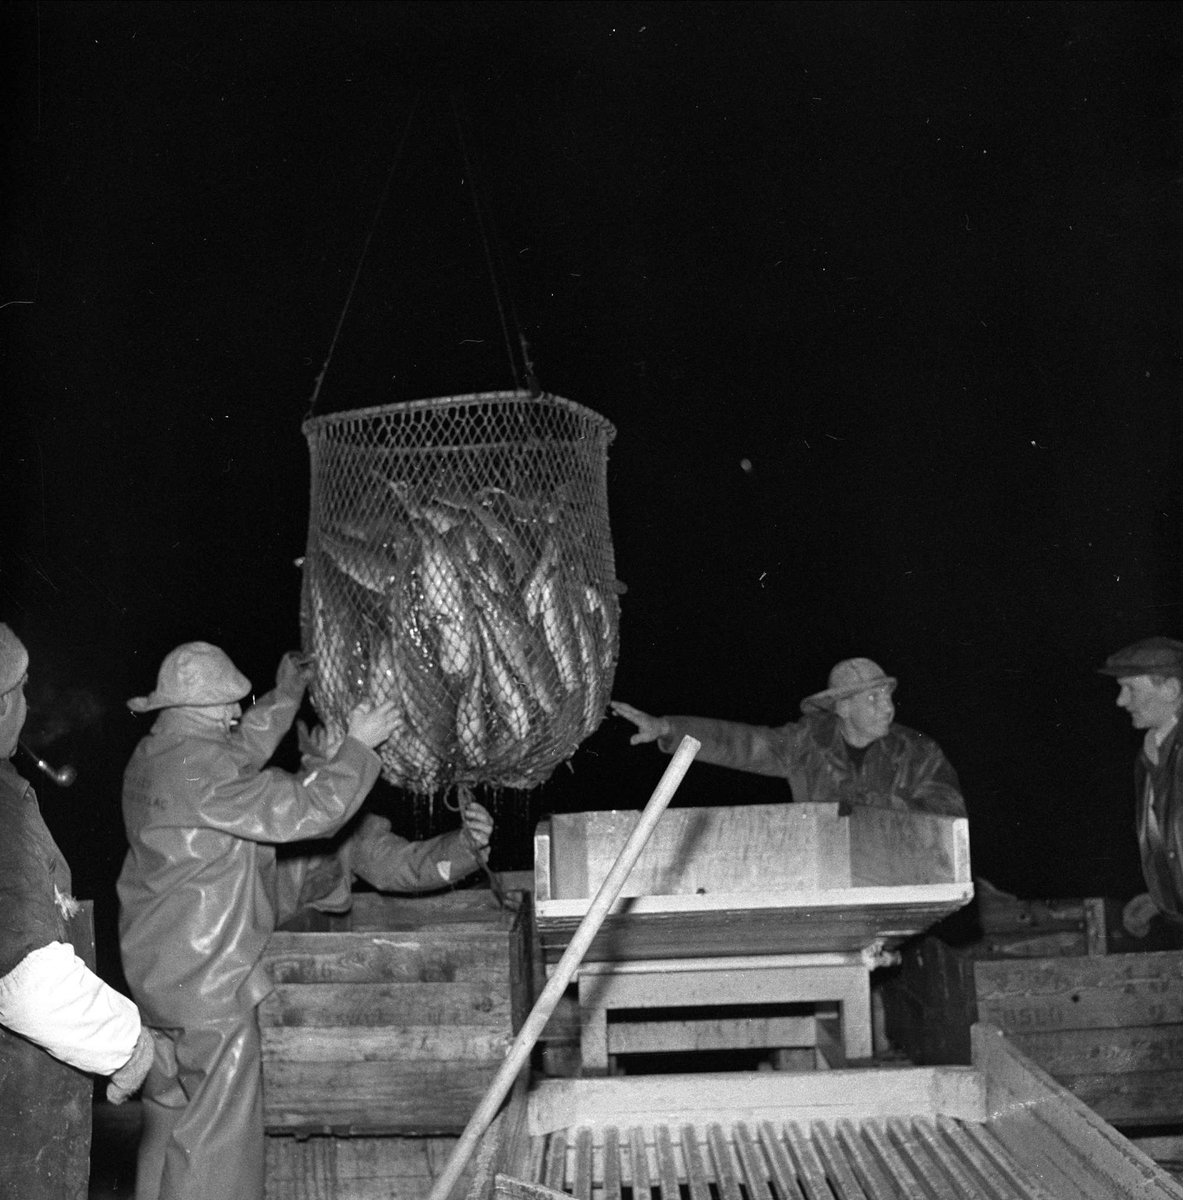 Juletorsken kommer til Oslo, 24.12.1956